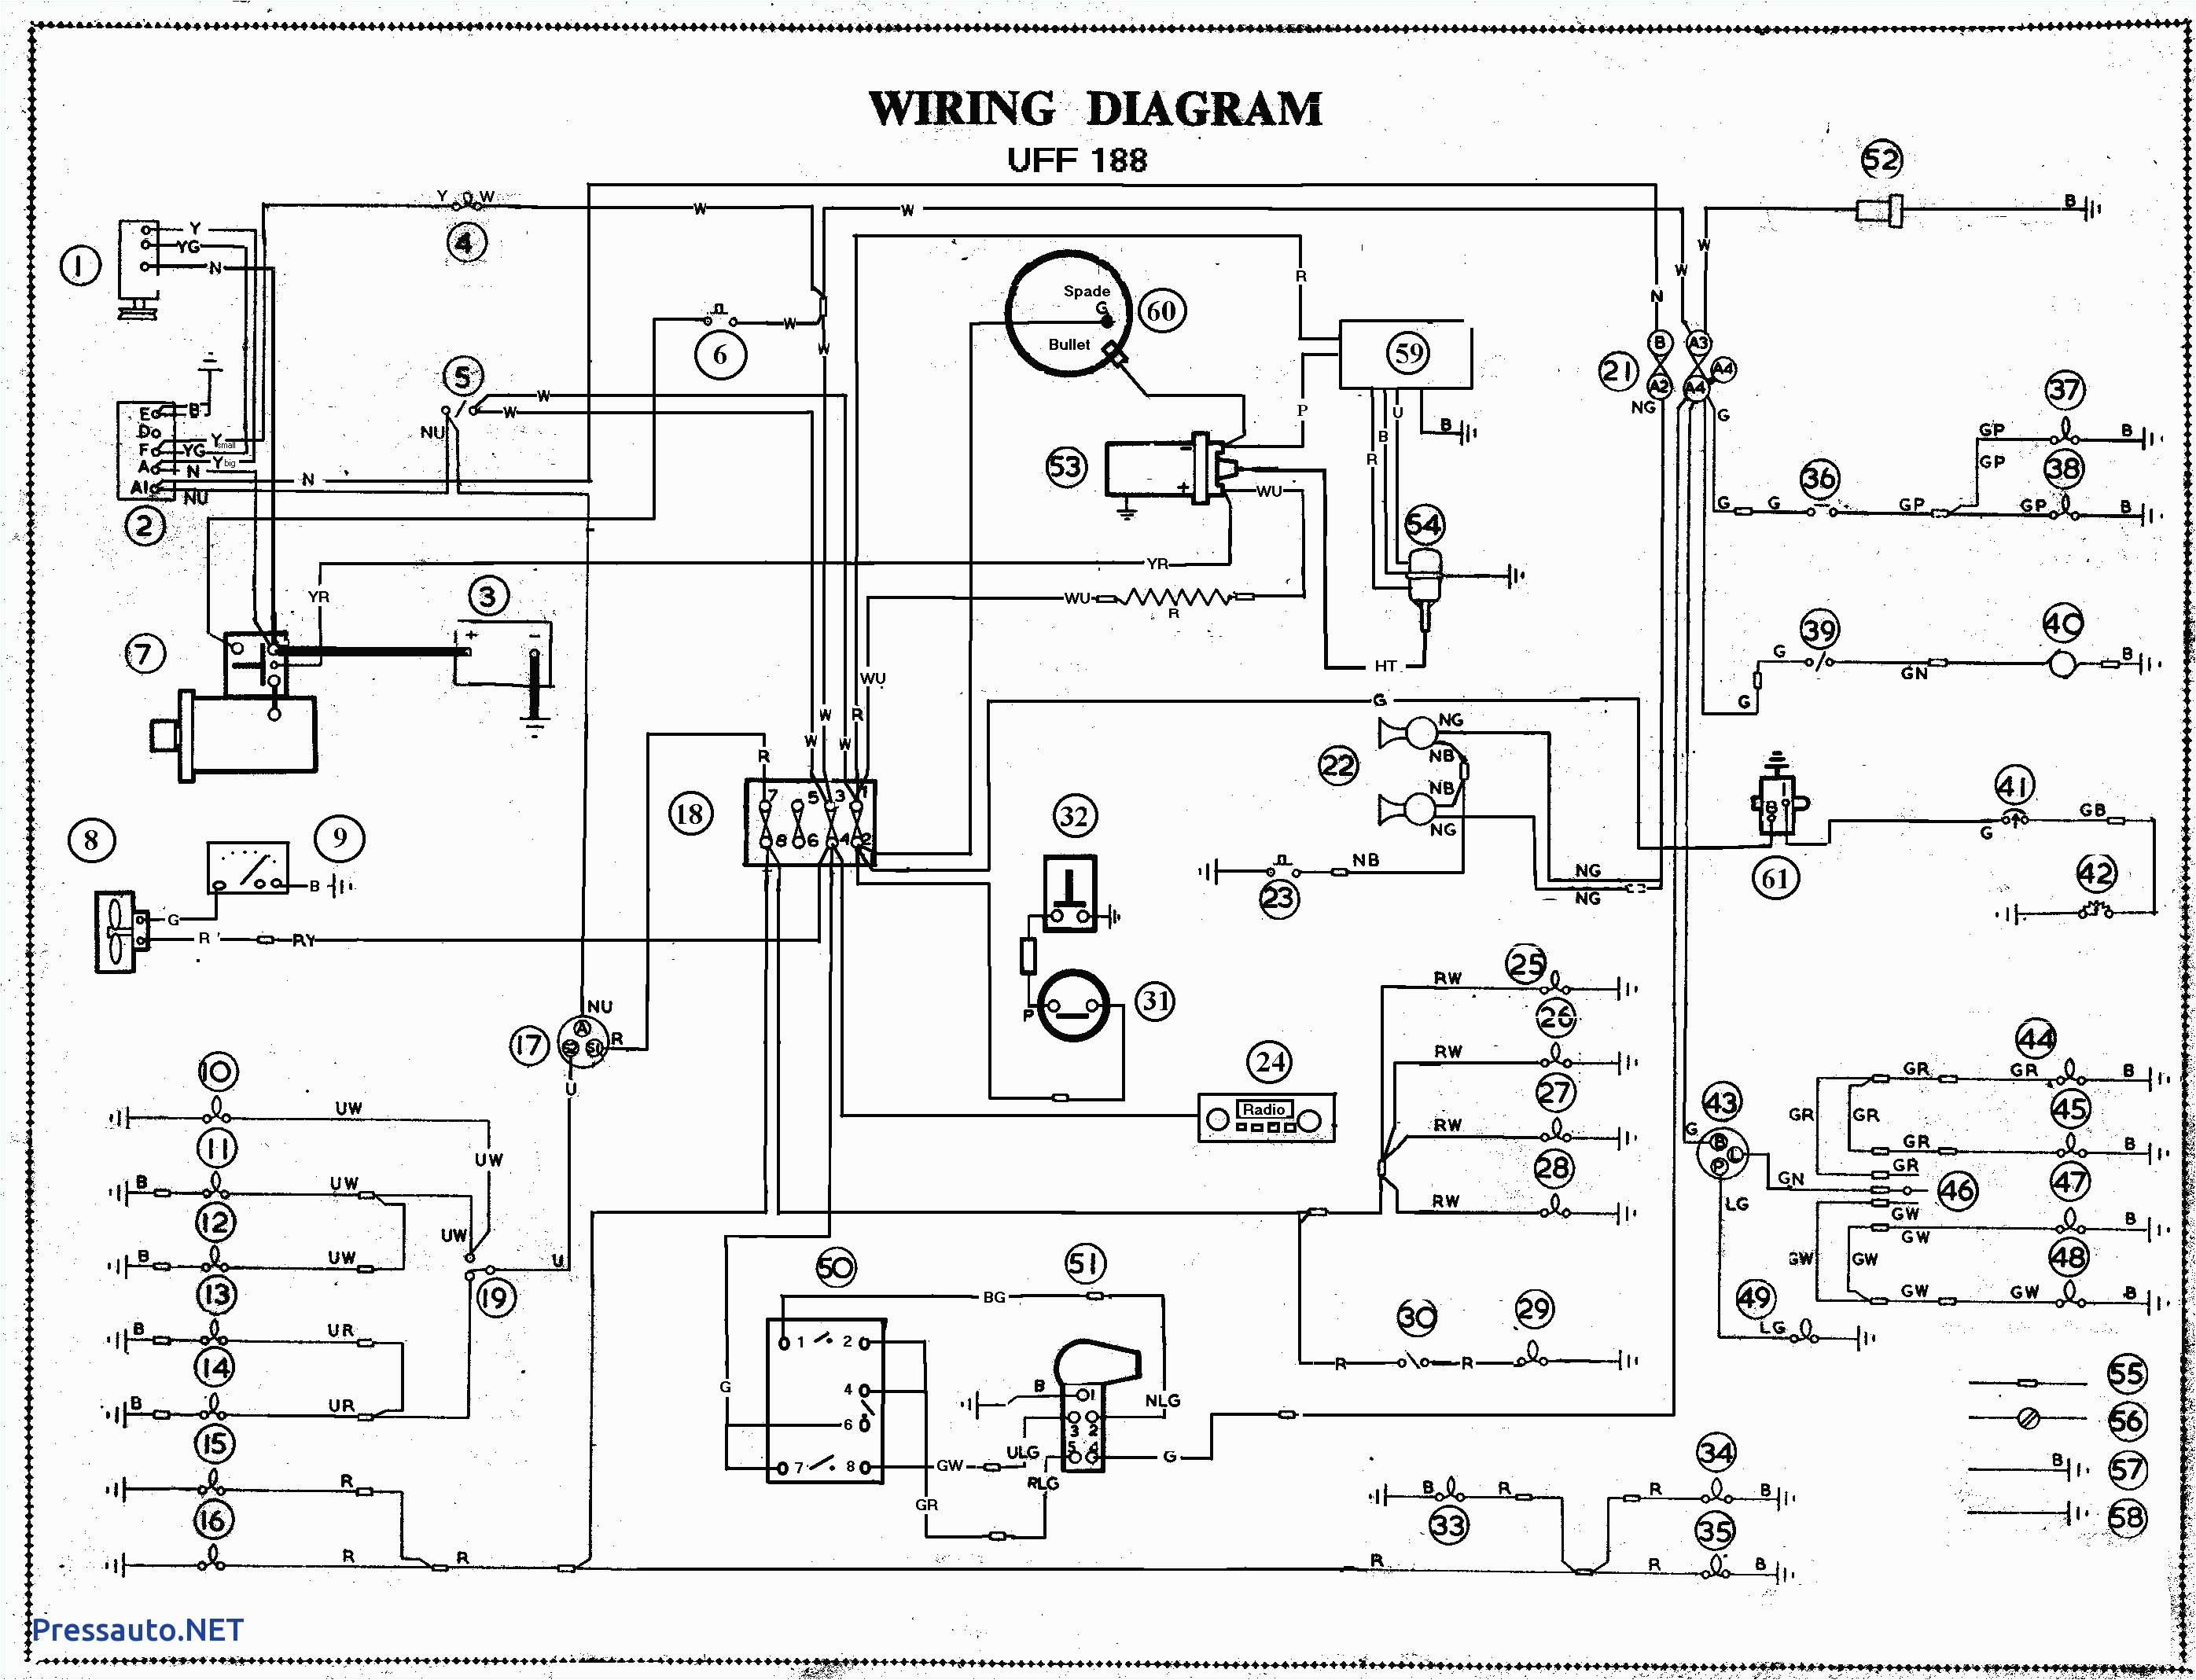 vehicle electrical diagram wiring diagram toolbox electrical diagram of car aircon electrical diagram of car